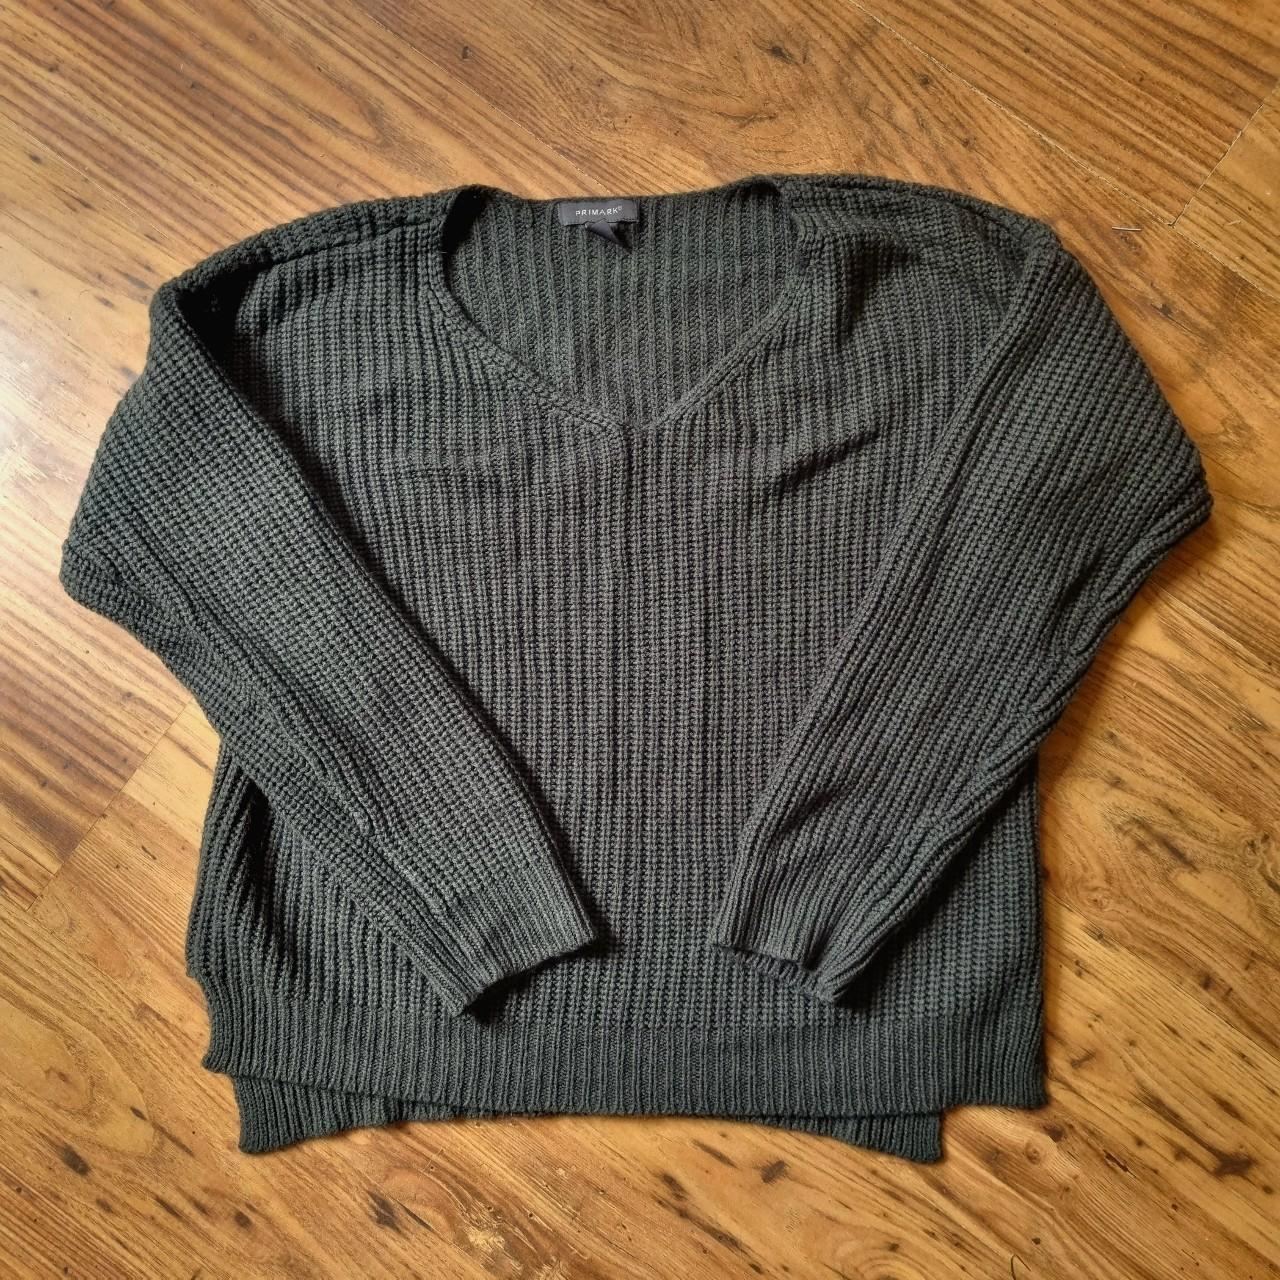 Ash grey sweater - Depop